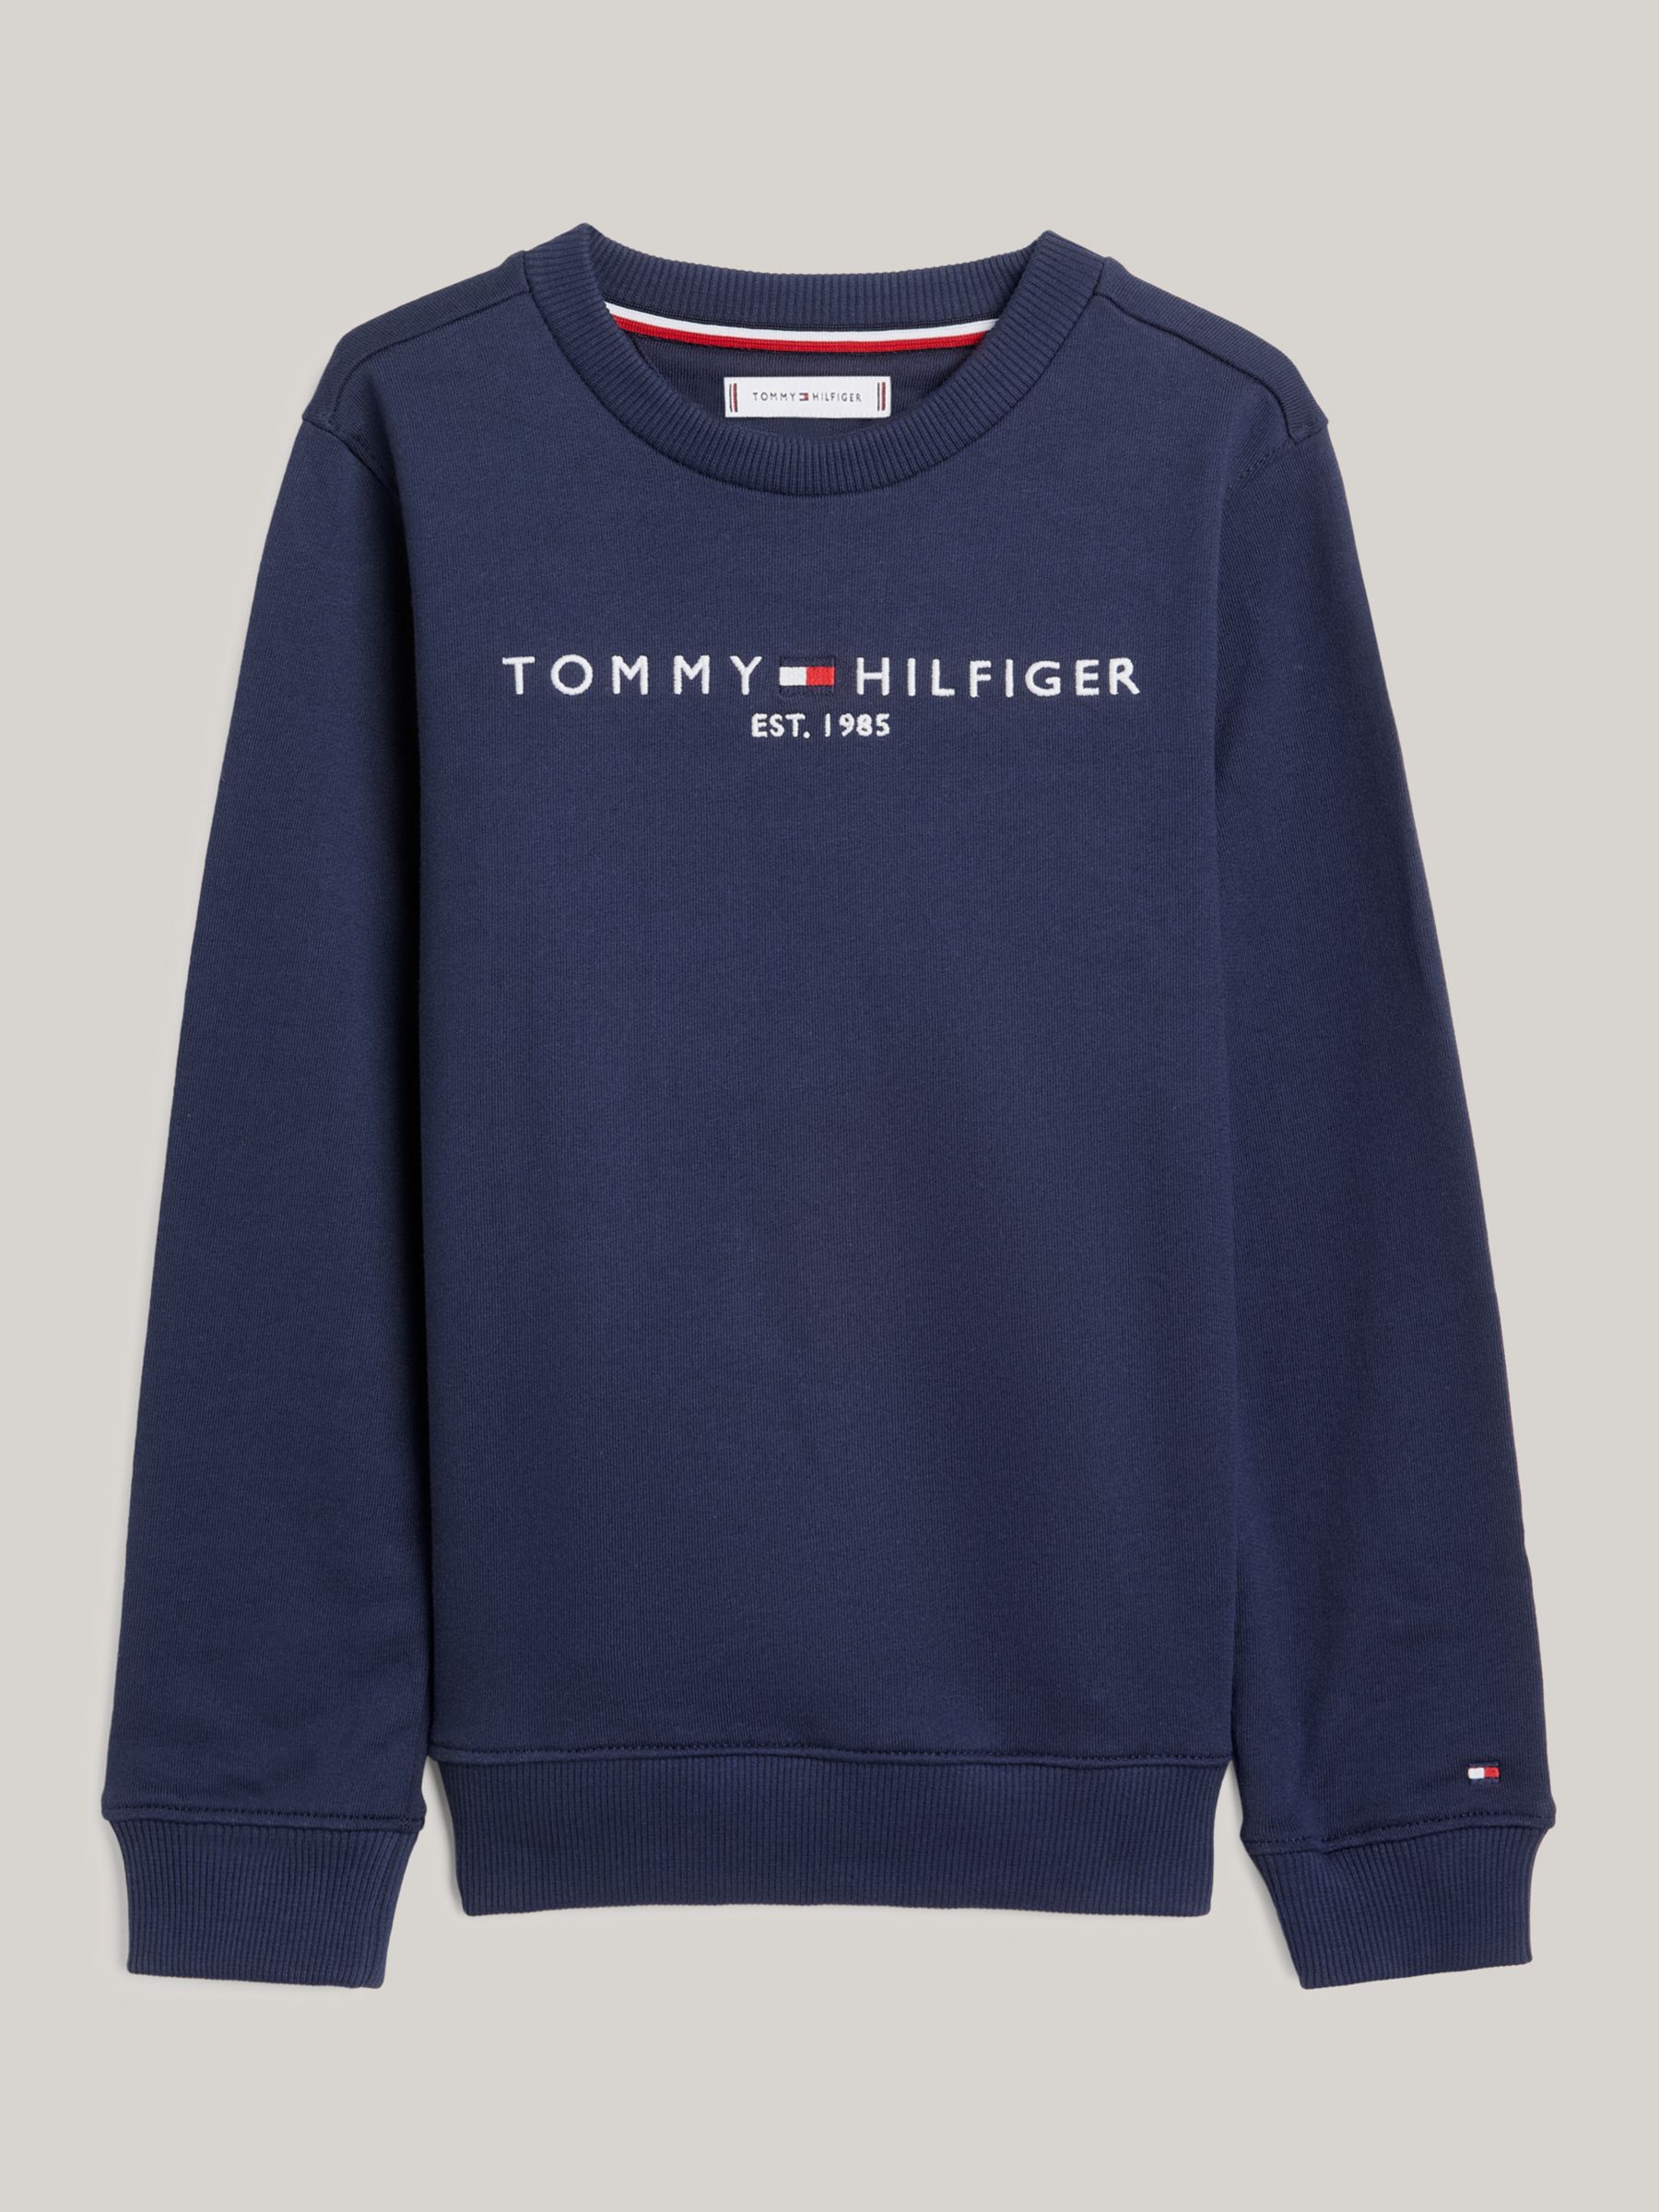 Tommy Hilfiger Kids\' Essential Lewis John Cotton Navy Organic Twilight Sweatshirt, at Partners Logo 